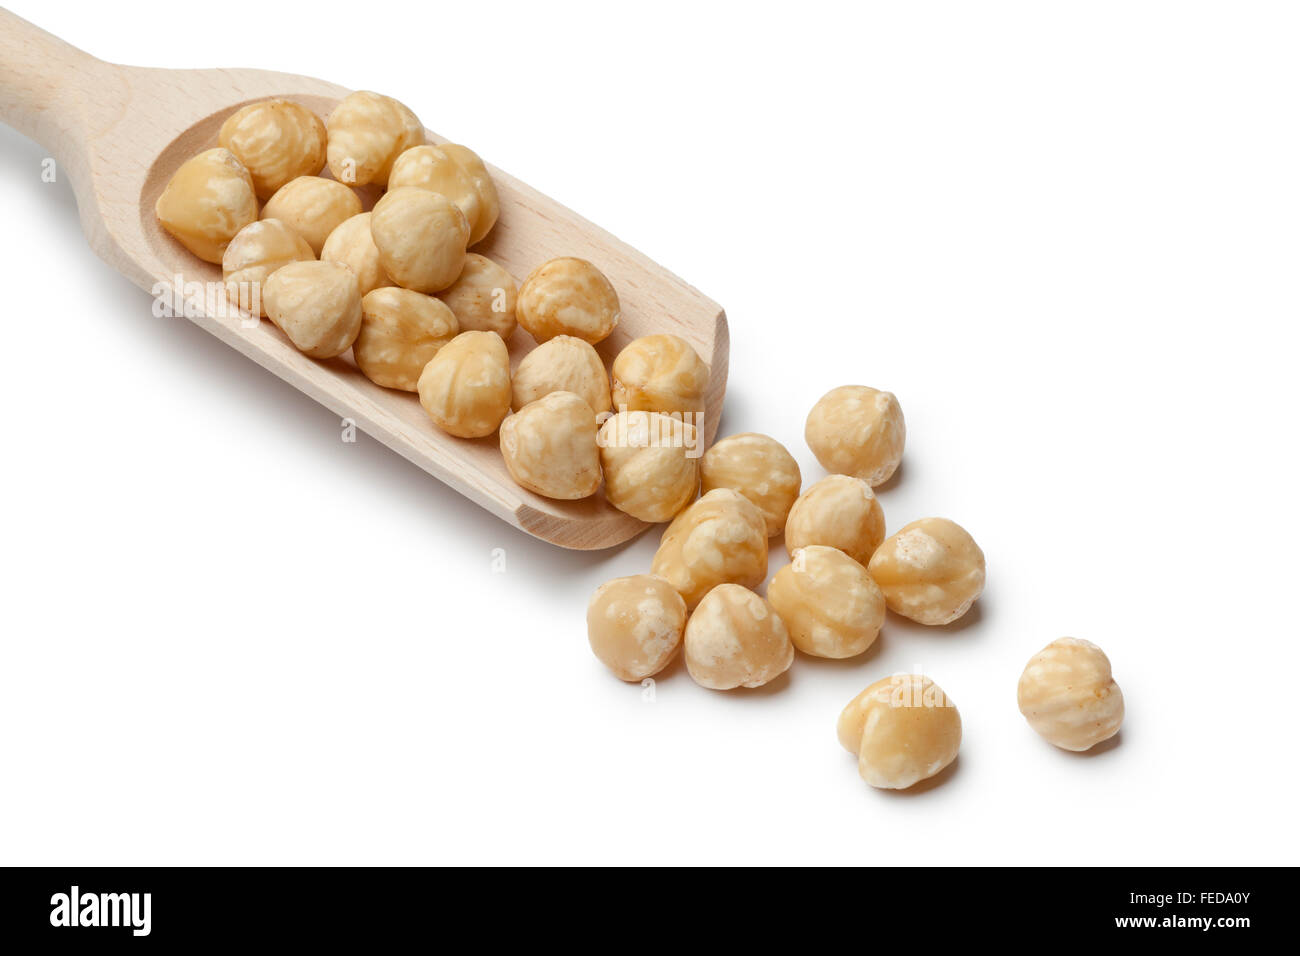 Fresh Macadamia nuts on a wooden spoon on white background Stock Photo